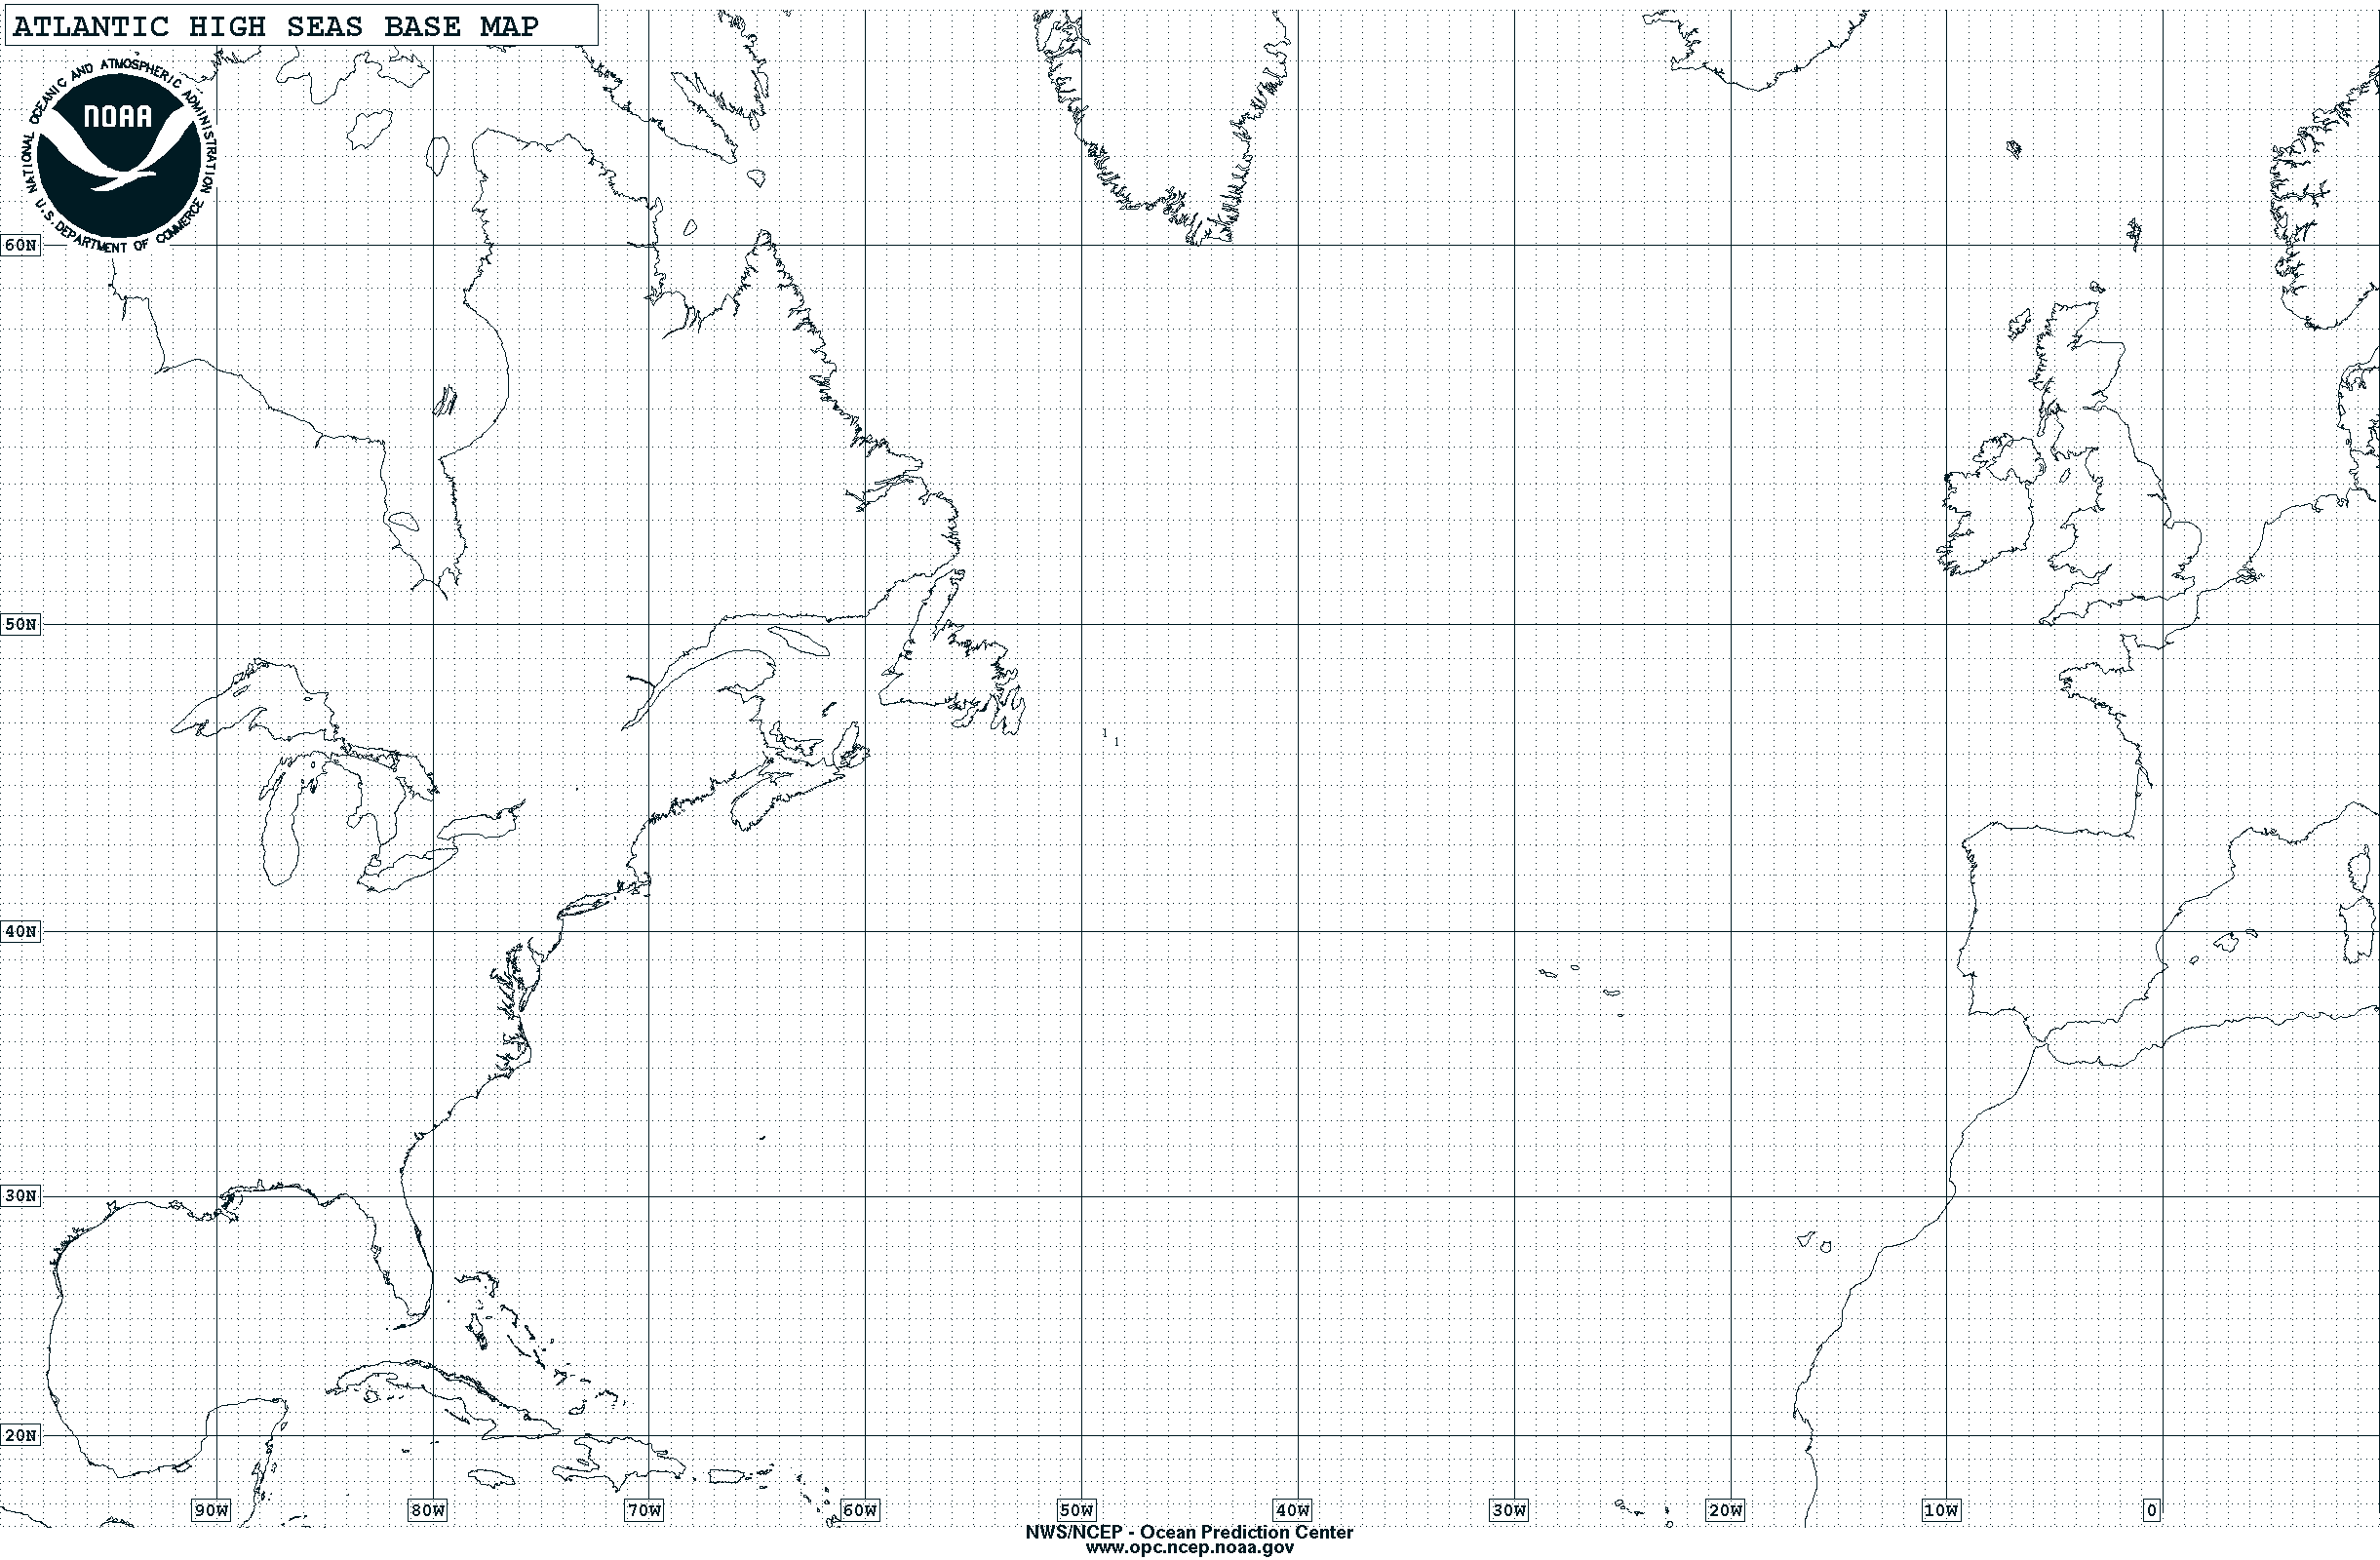 Atlantic High Seas blank base map